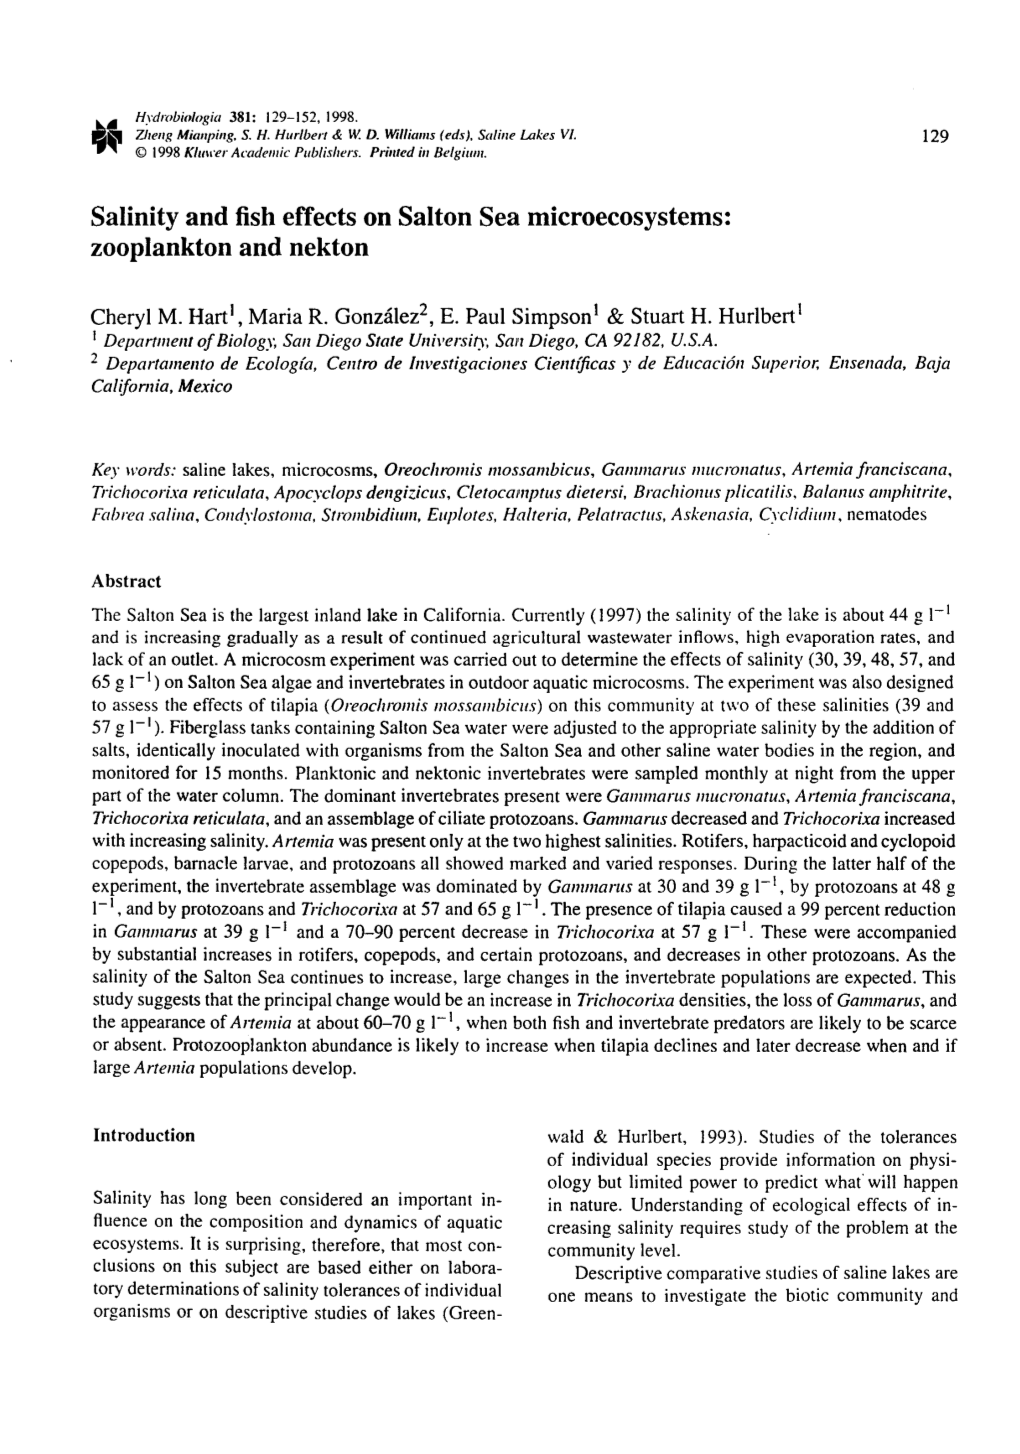 Salinity and Fish Effects on Salton Sea Microecosystems : Zooplankton and Nekton